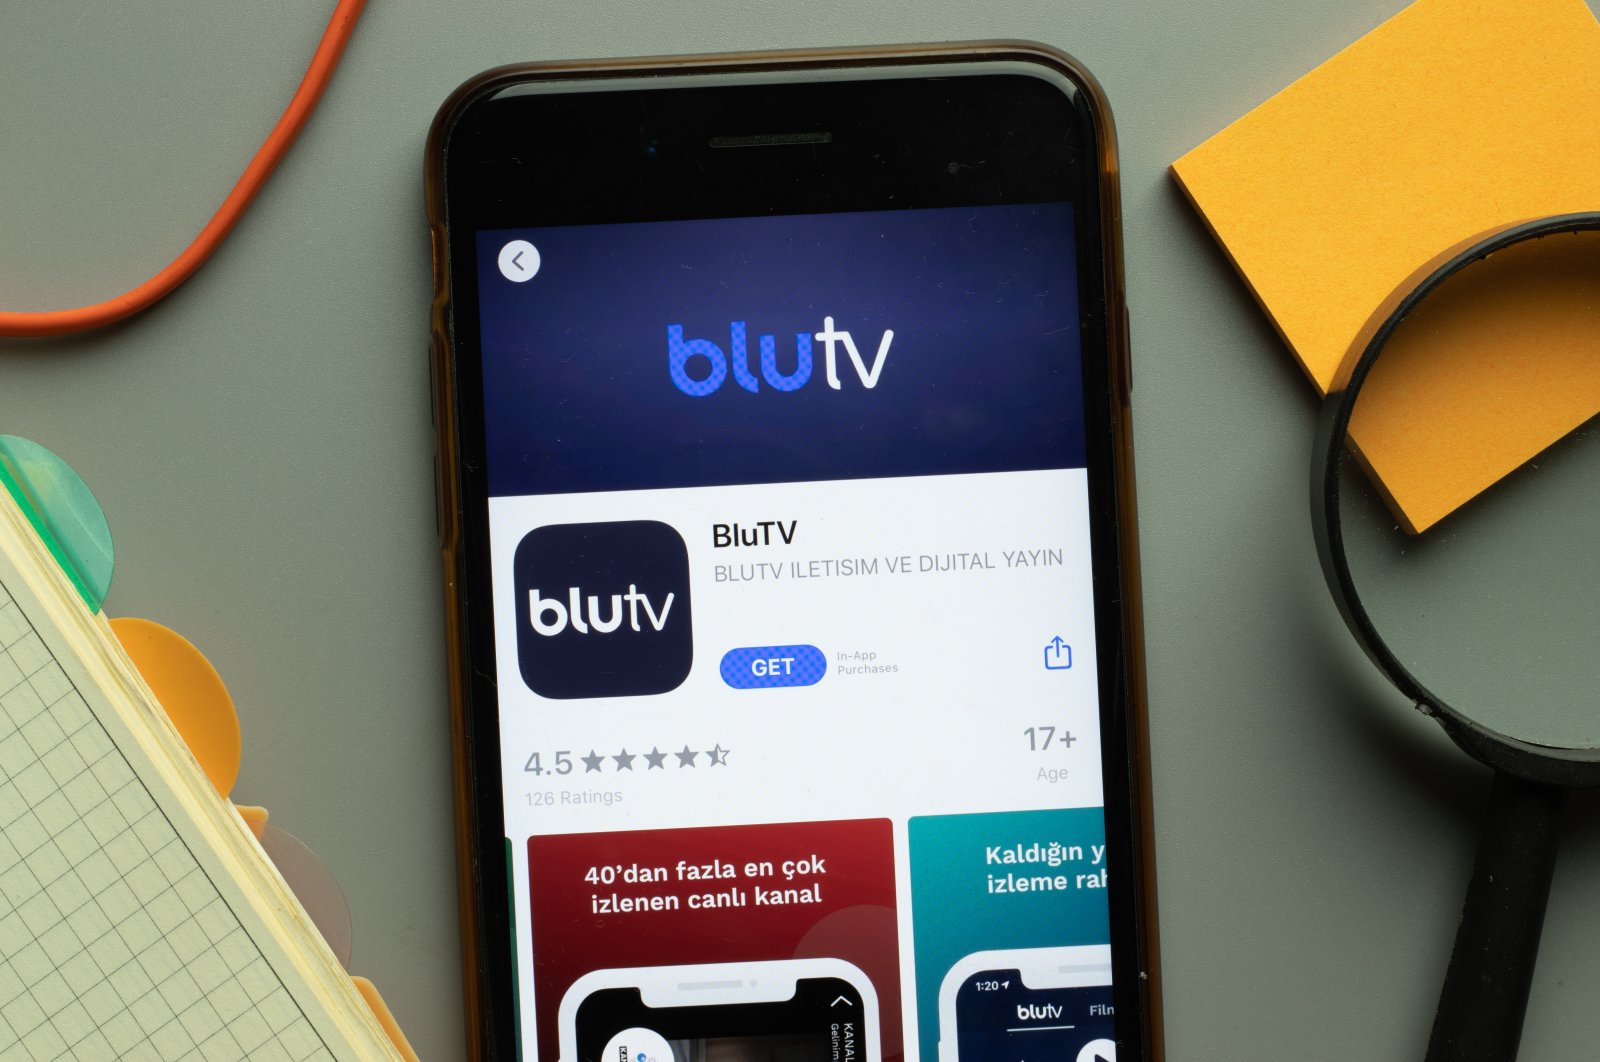 BluTV mobile app logo on a phone screen, in New York, Oct. 26, 2020.